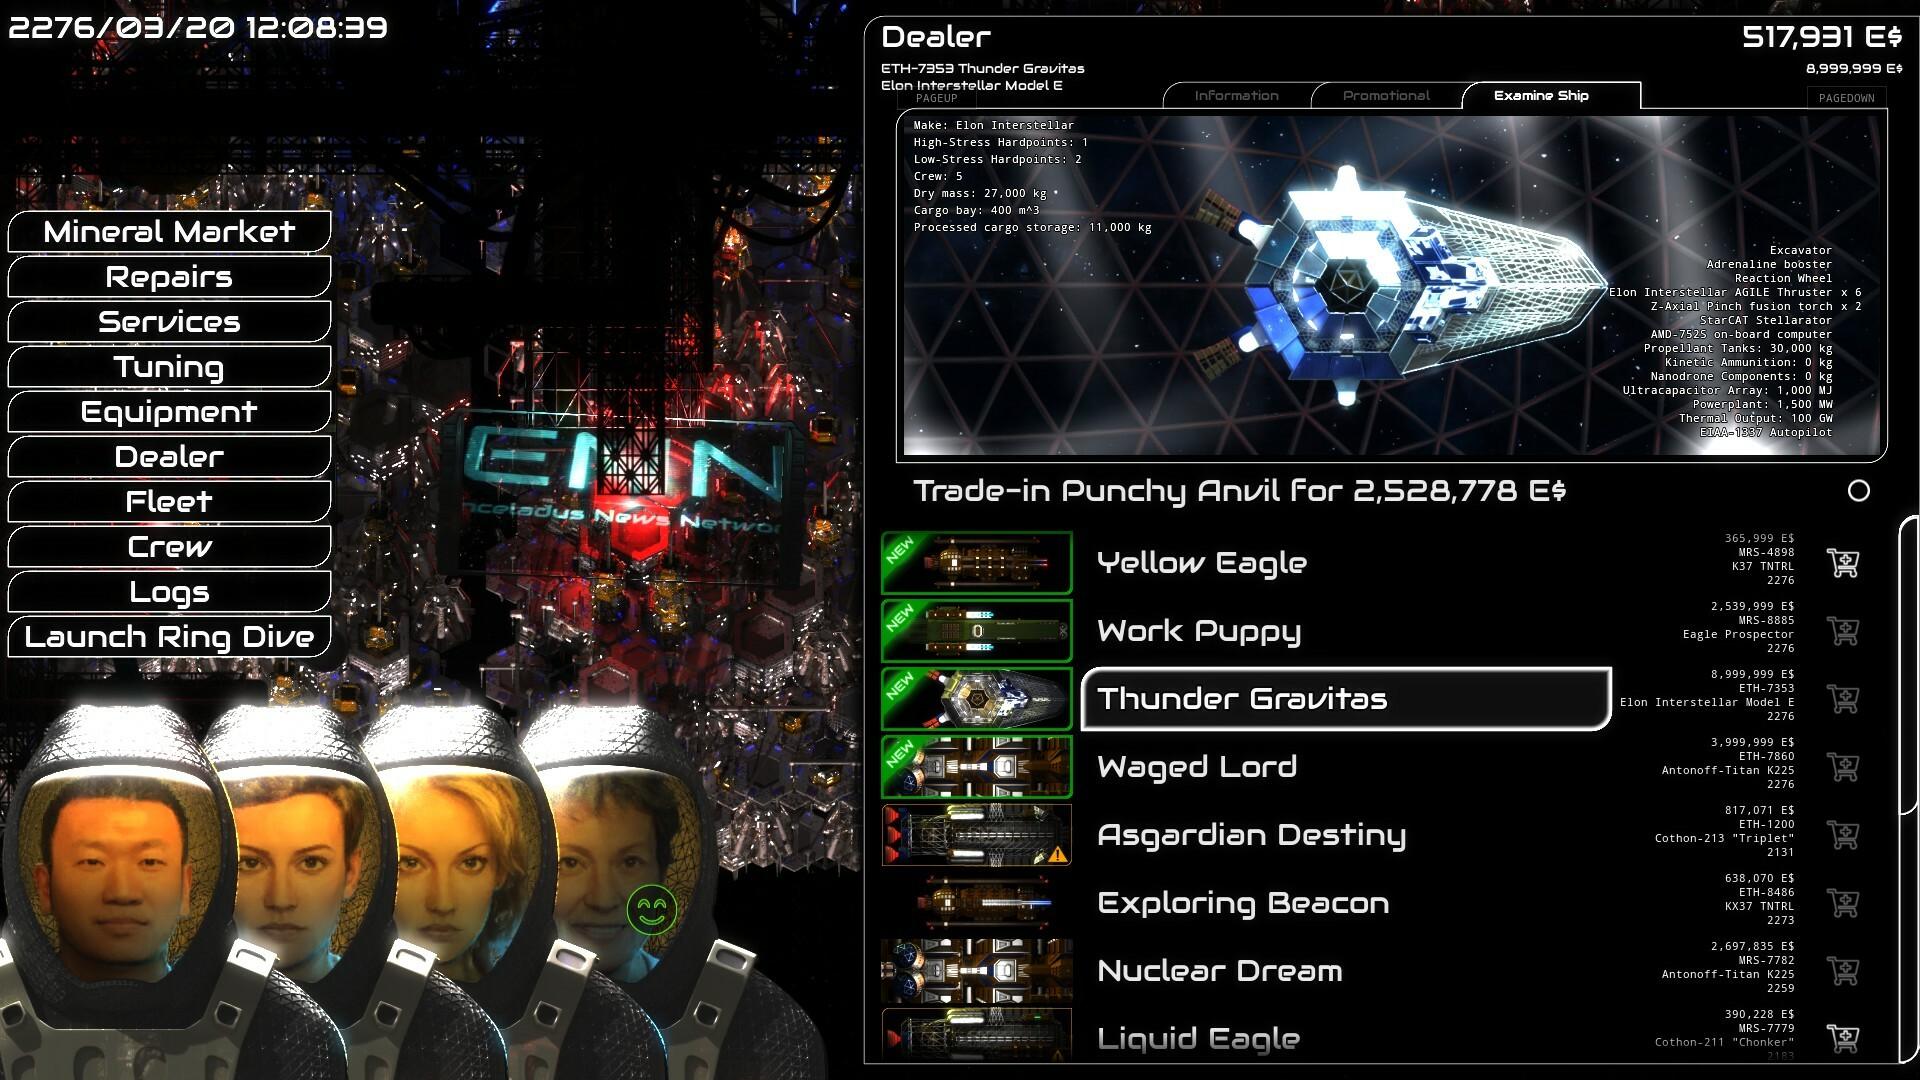 Screenshot №7 from game ΔV: Rings of Saturn